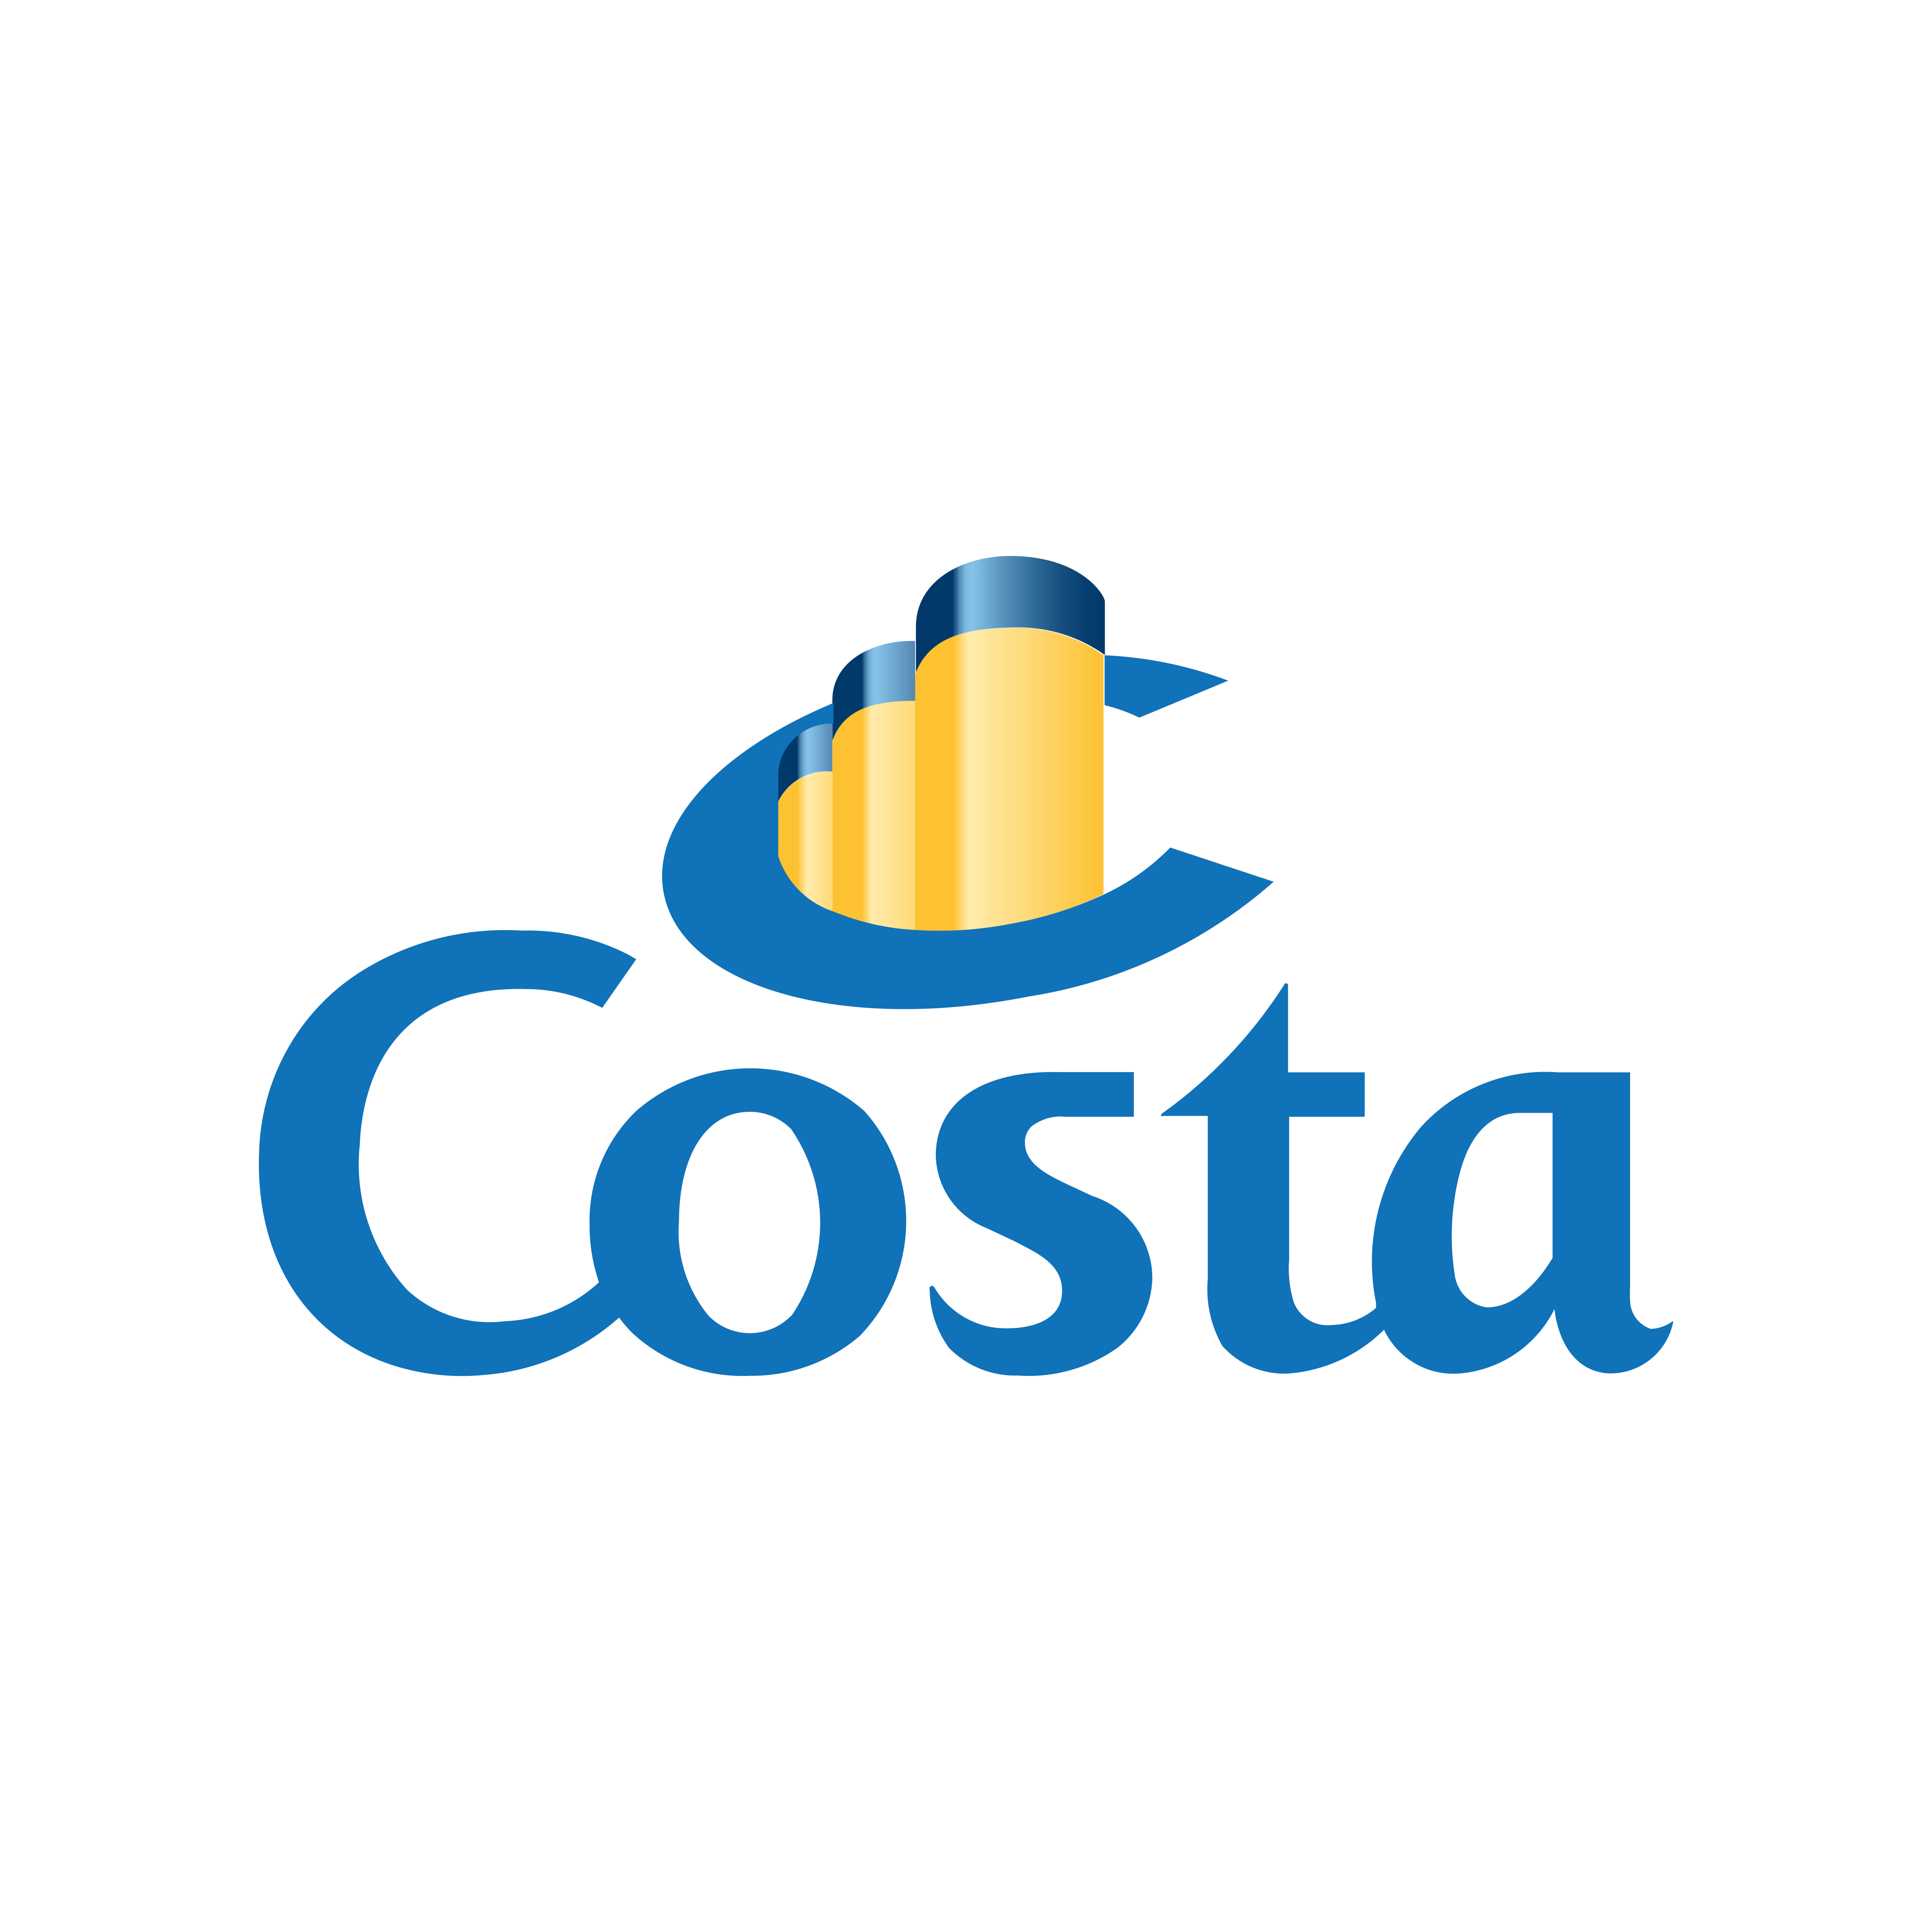 costa crociere logo 0 - Costa Cruises Logo